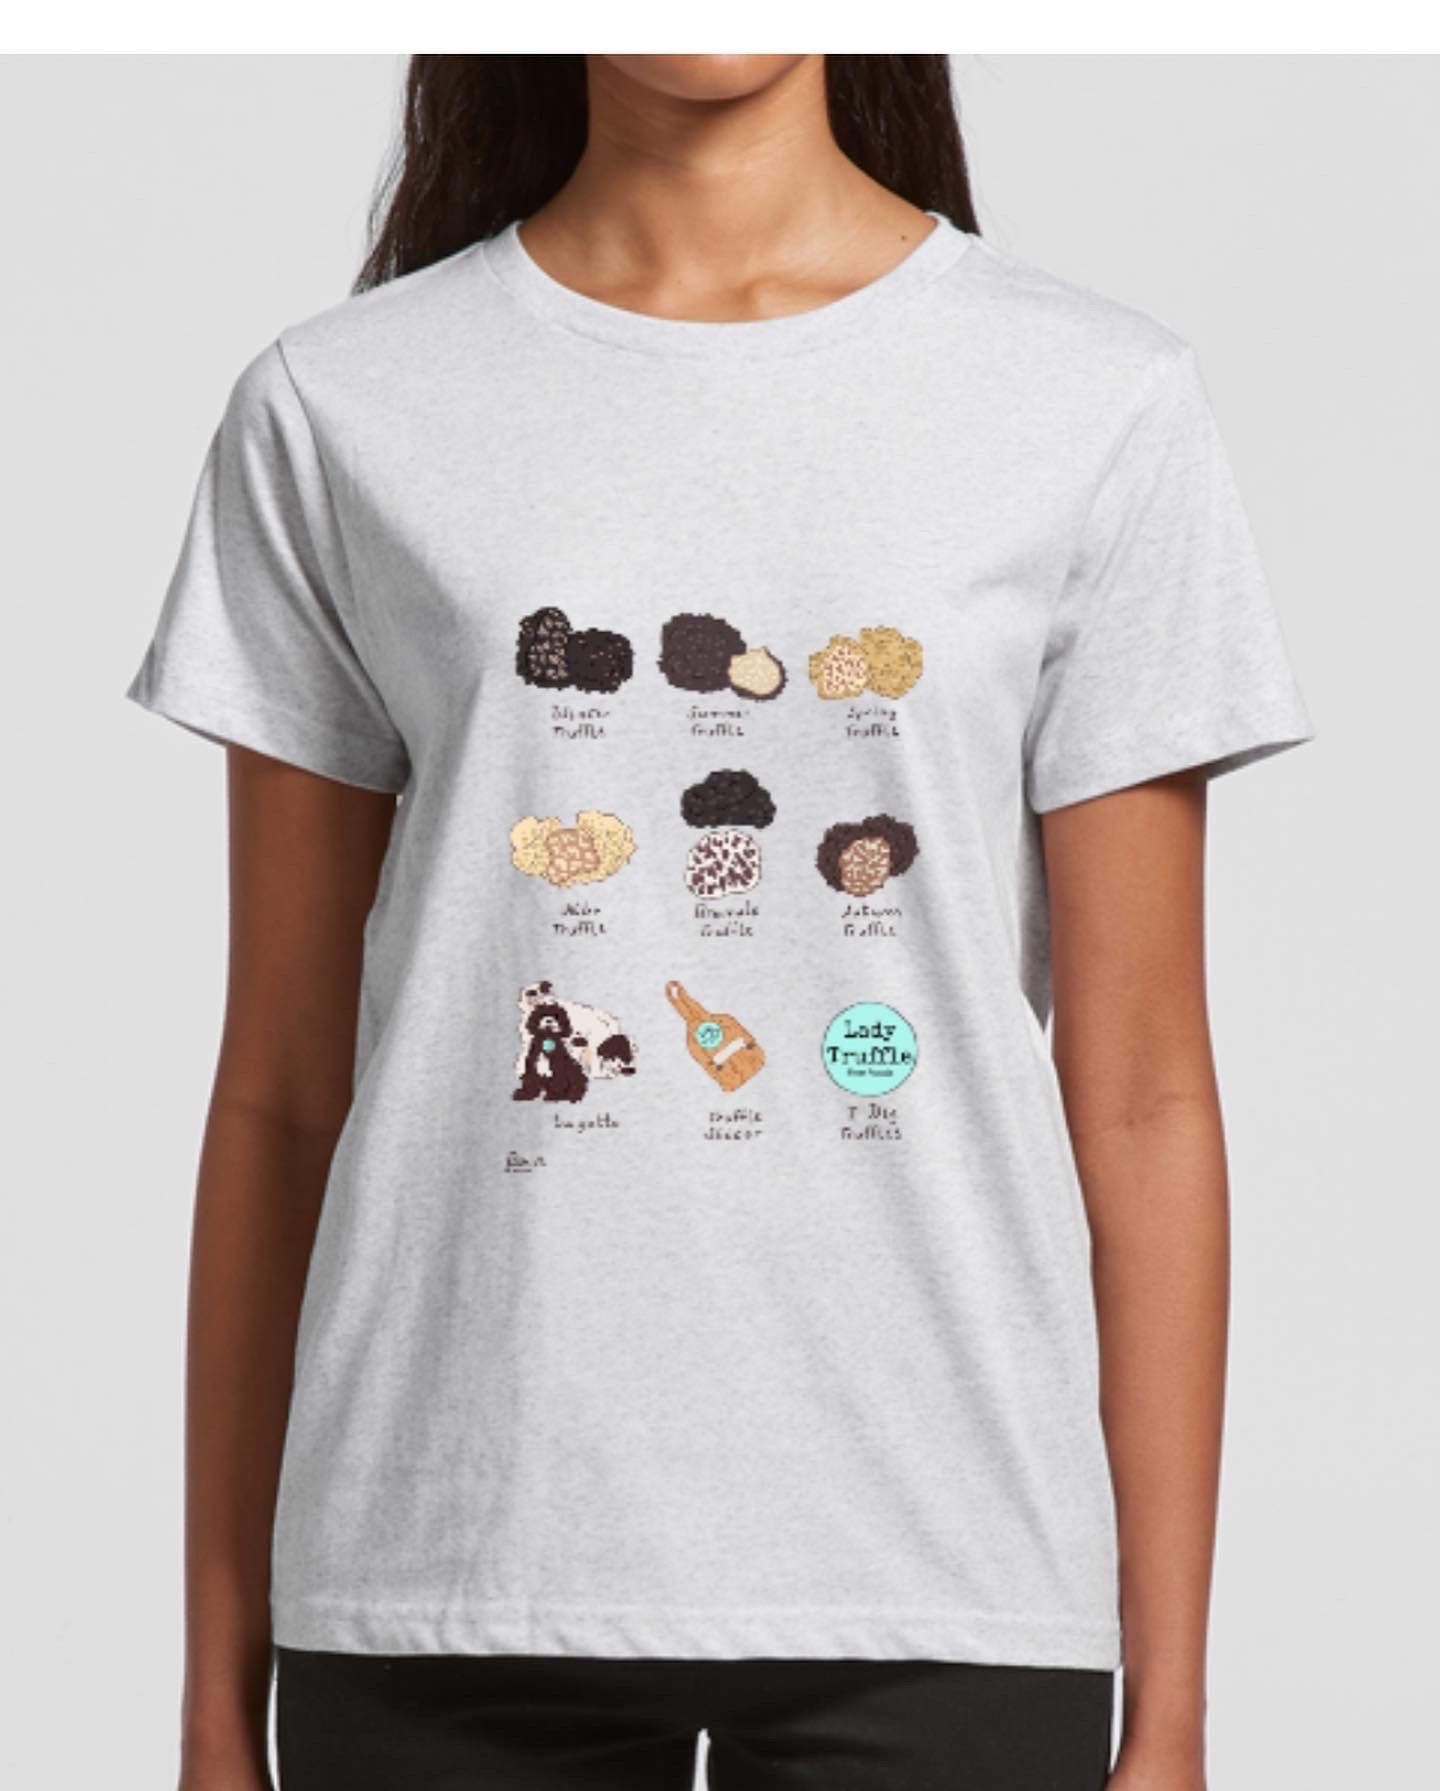 Truffle T-shirts (Ladies)